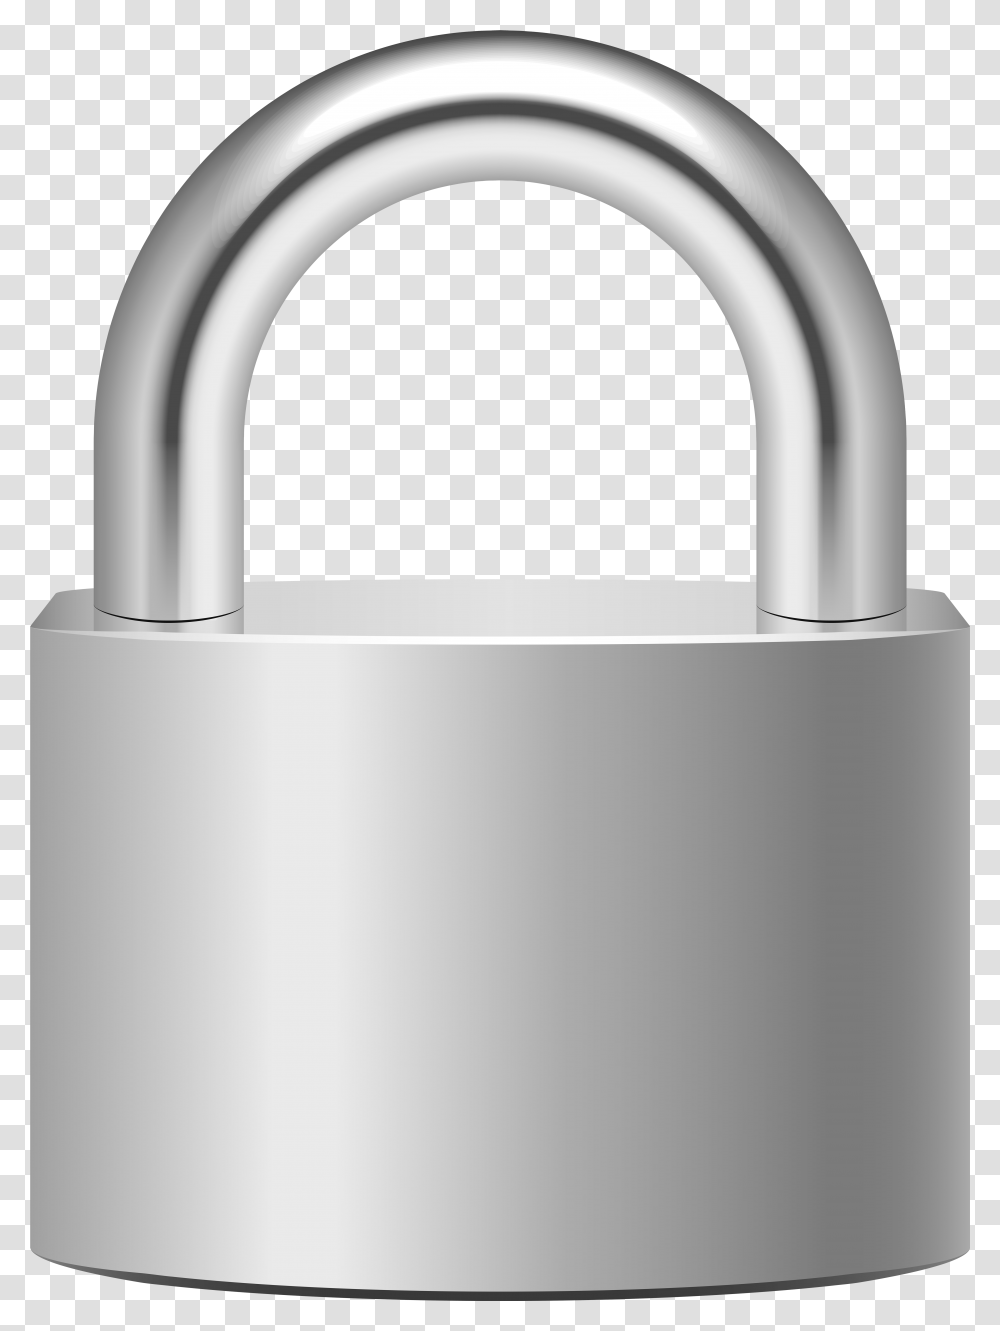 Padlock Silver Clip Art Silver Lock, Sink Faucet, Combination Lock Transparent Png